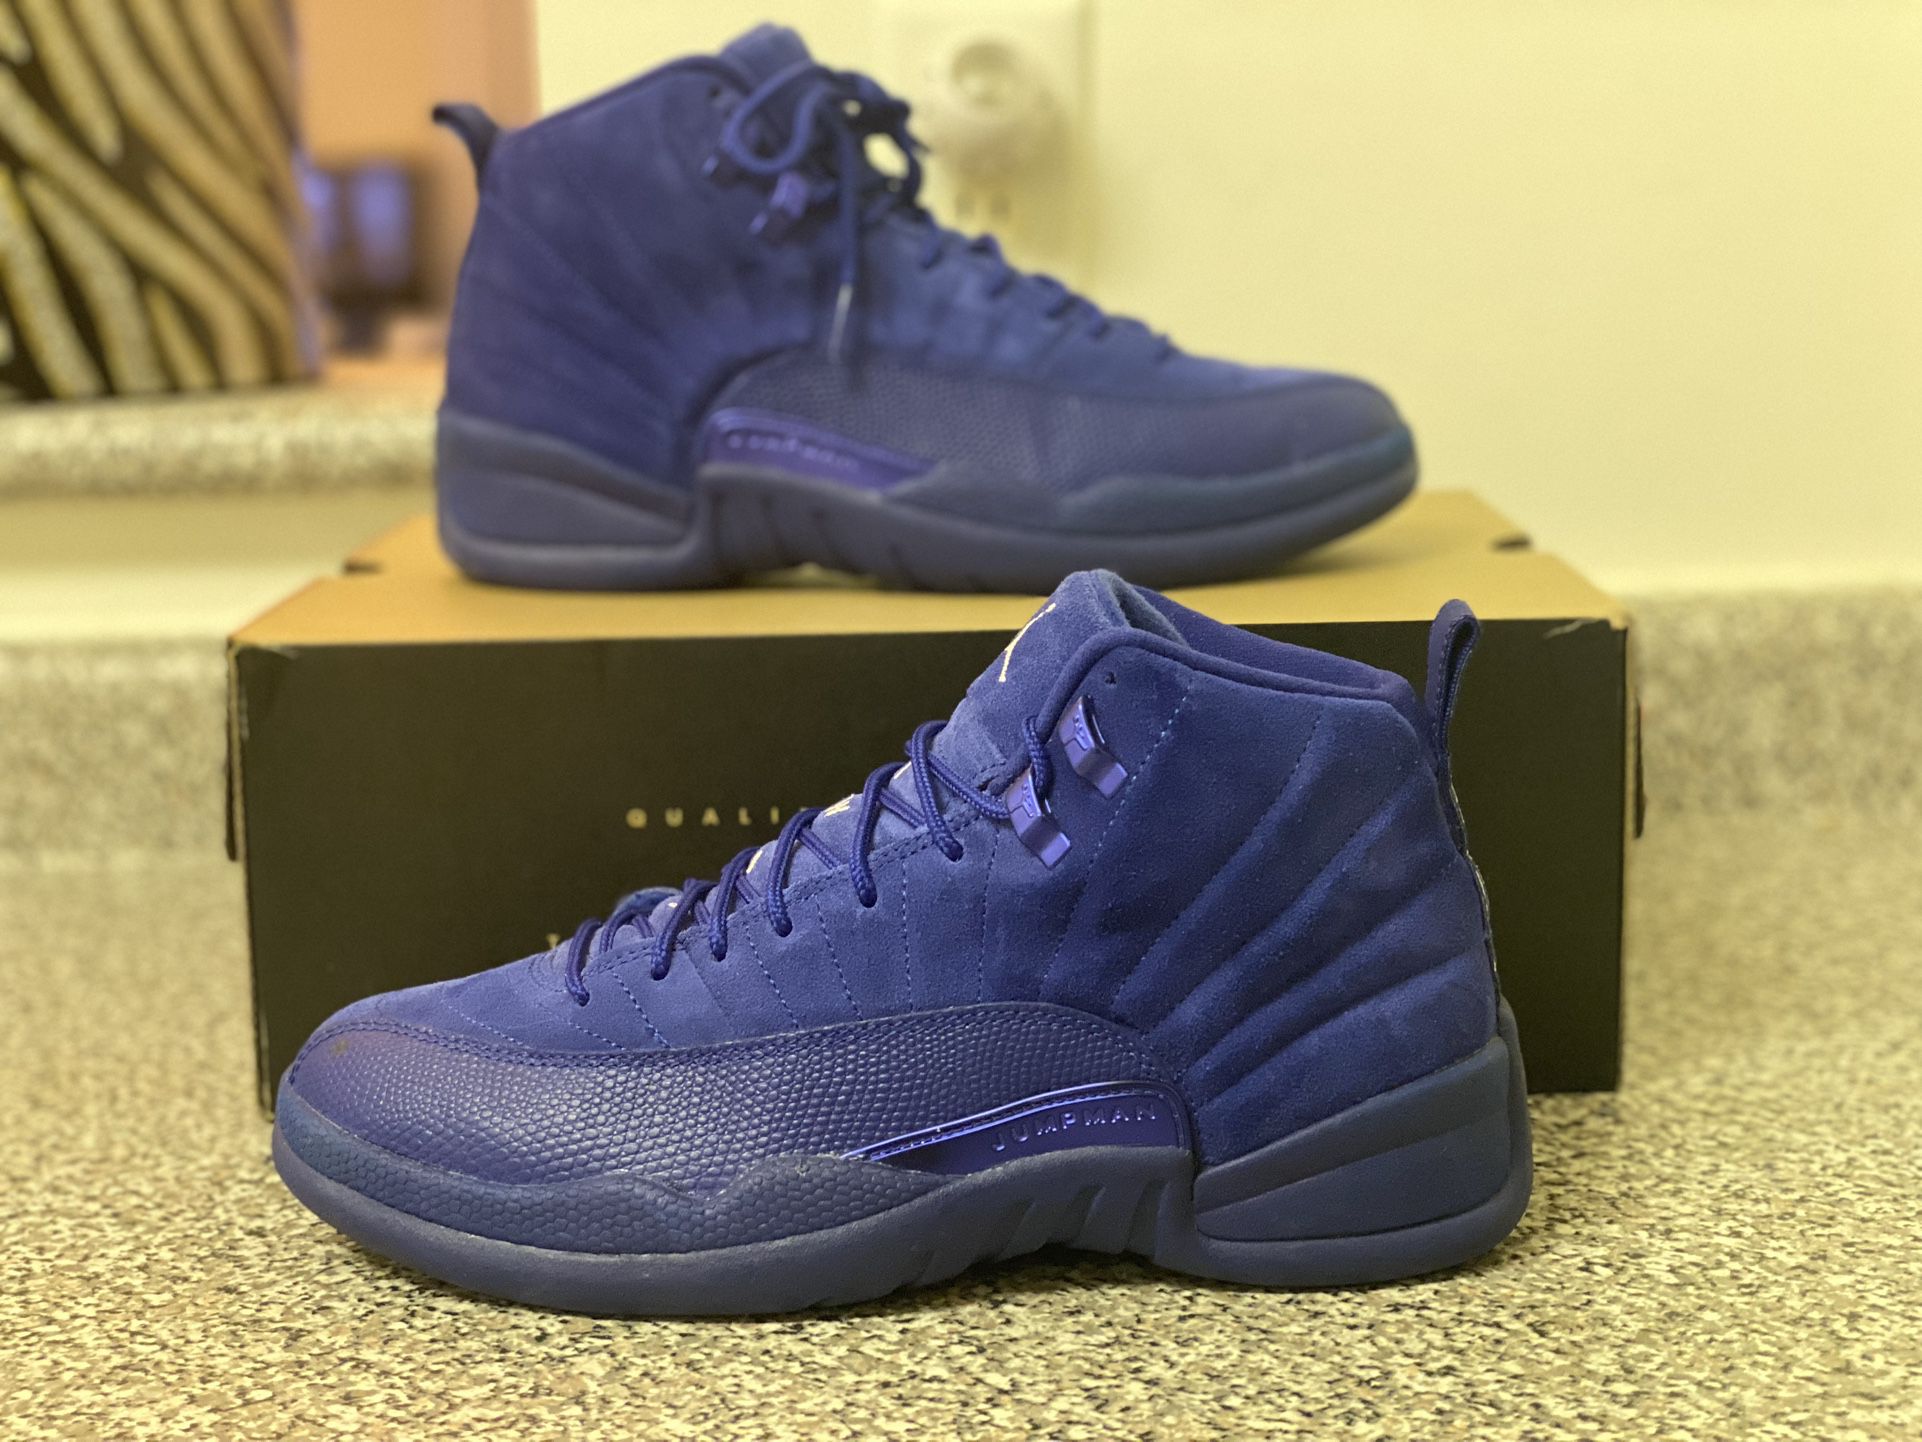 Jordan 12 Blue Suede Size 8.5